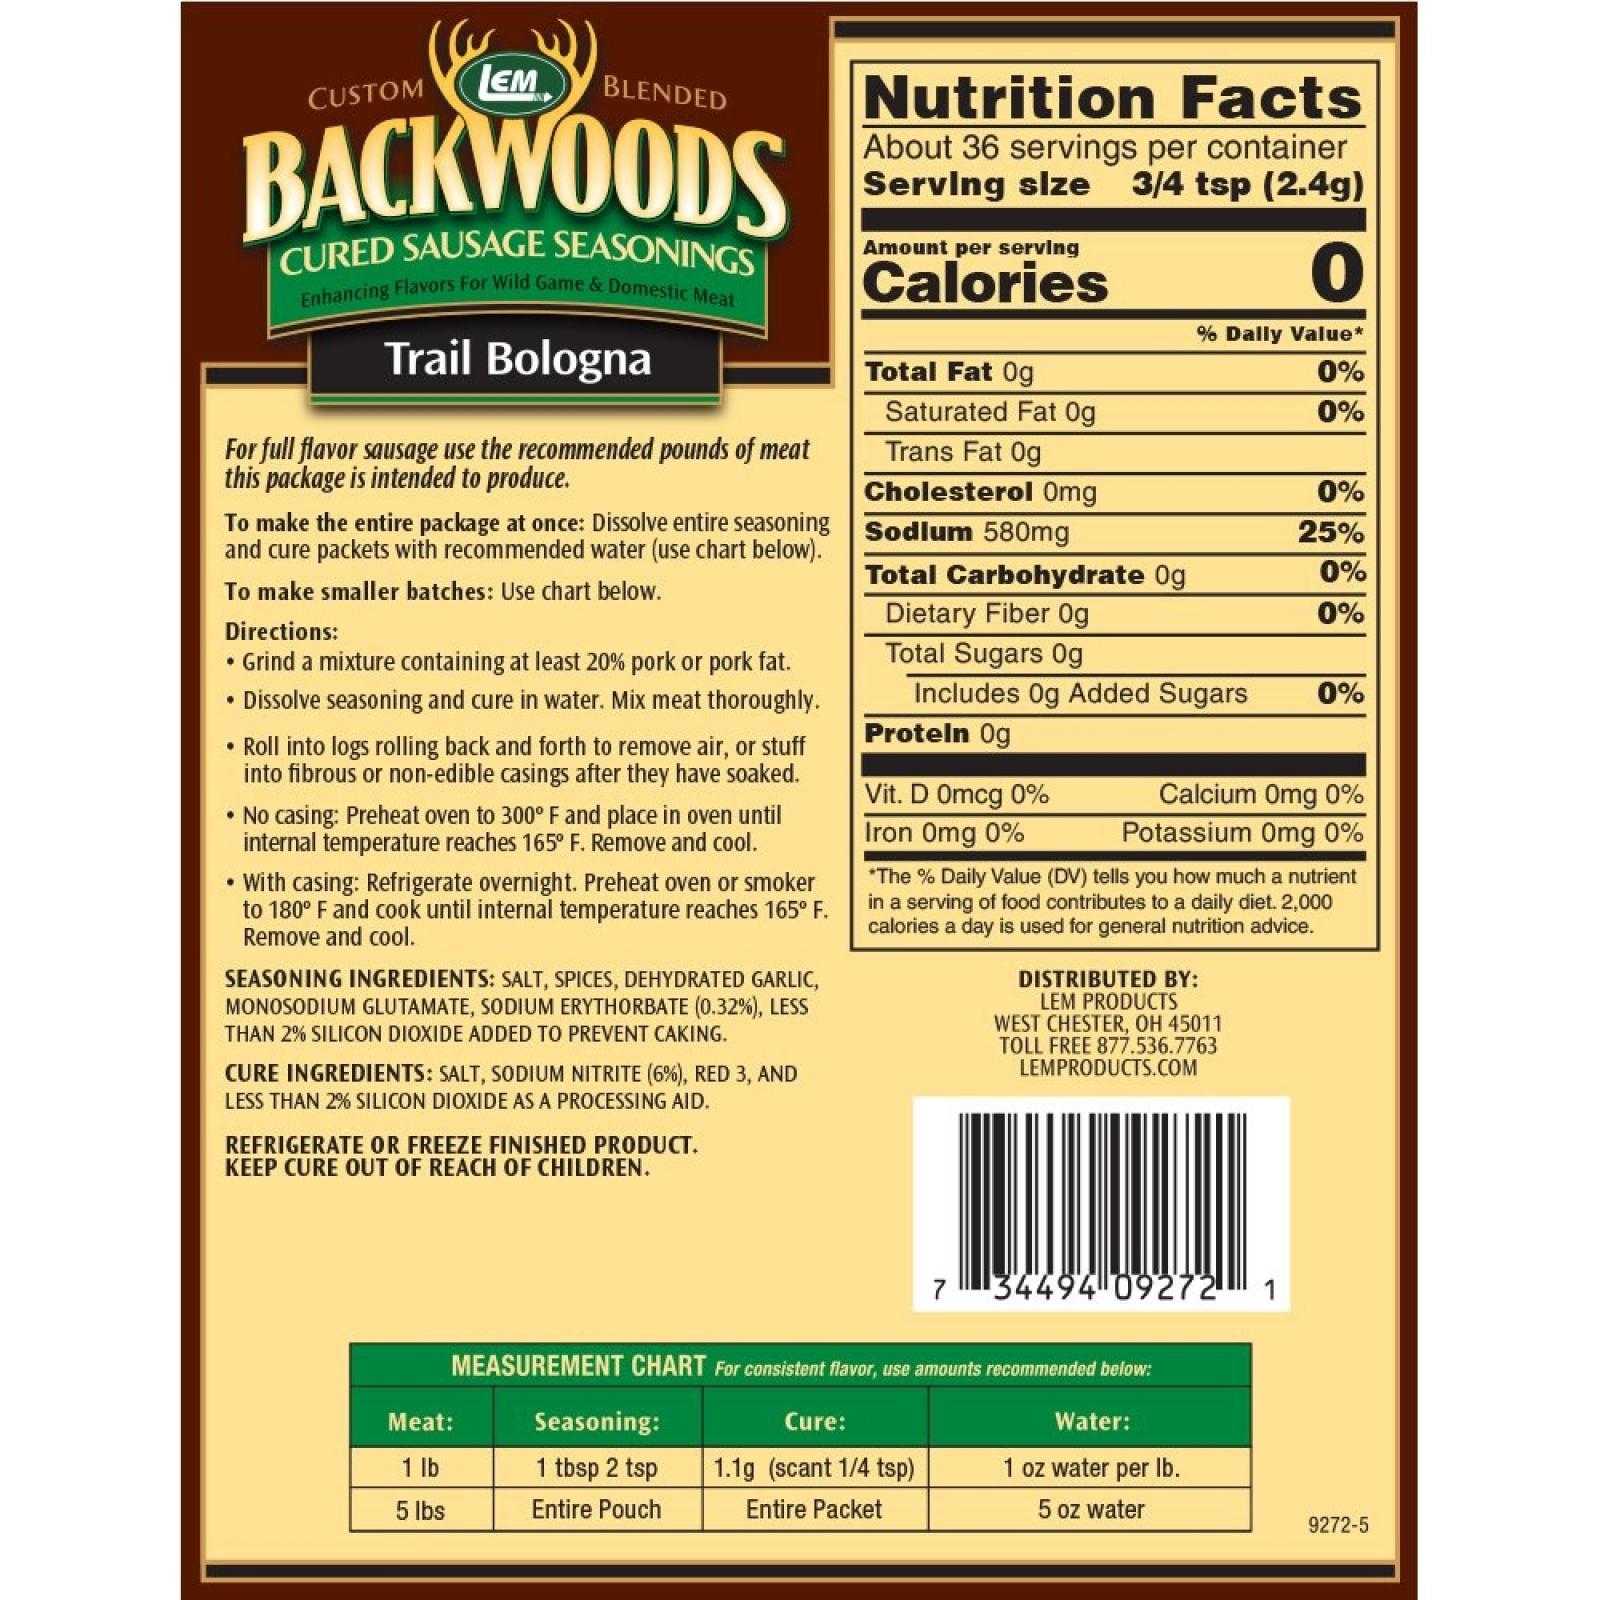 LEM Backwoods Trail Bologna Cured Sausage Seasonings 5lbs